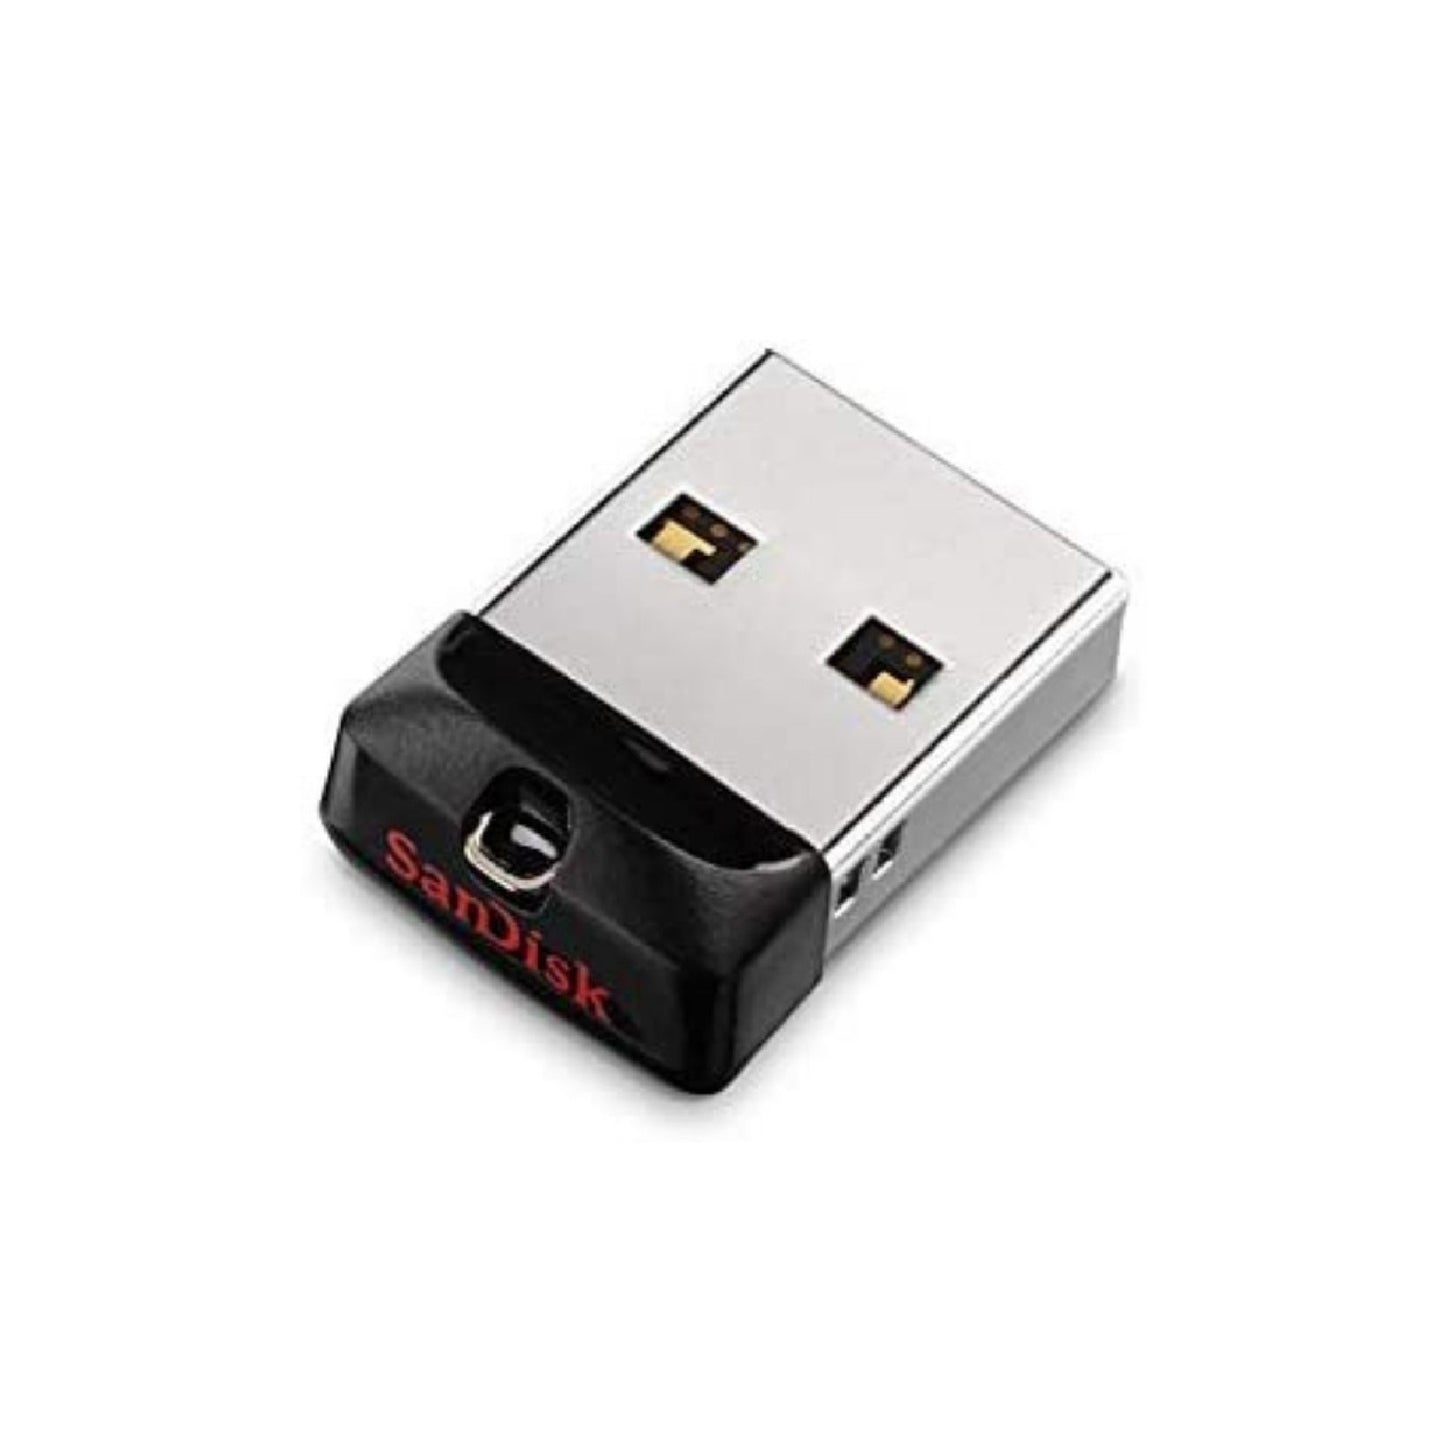 SanDisk Cruzer Fit 16GB USB 2.0 Flash Drive Memory Stick Pen Laptop Desktop MAC